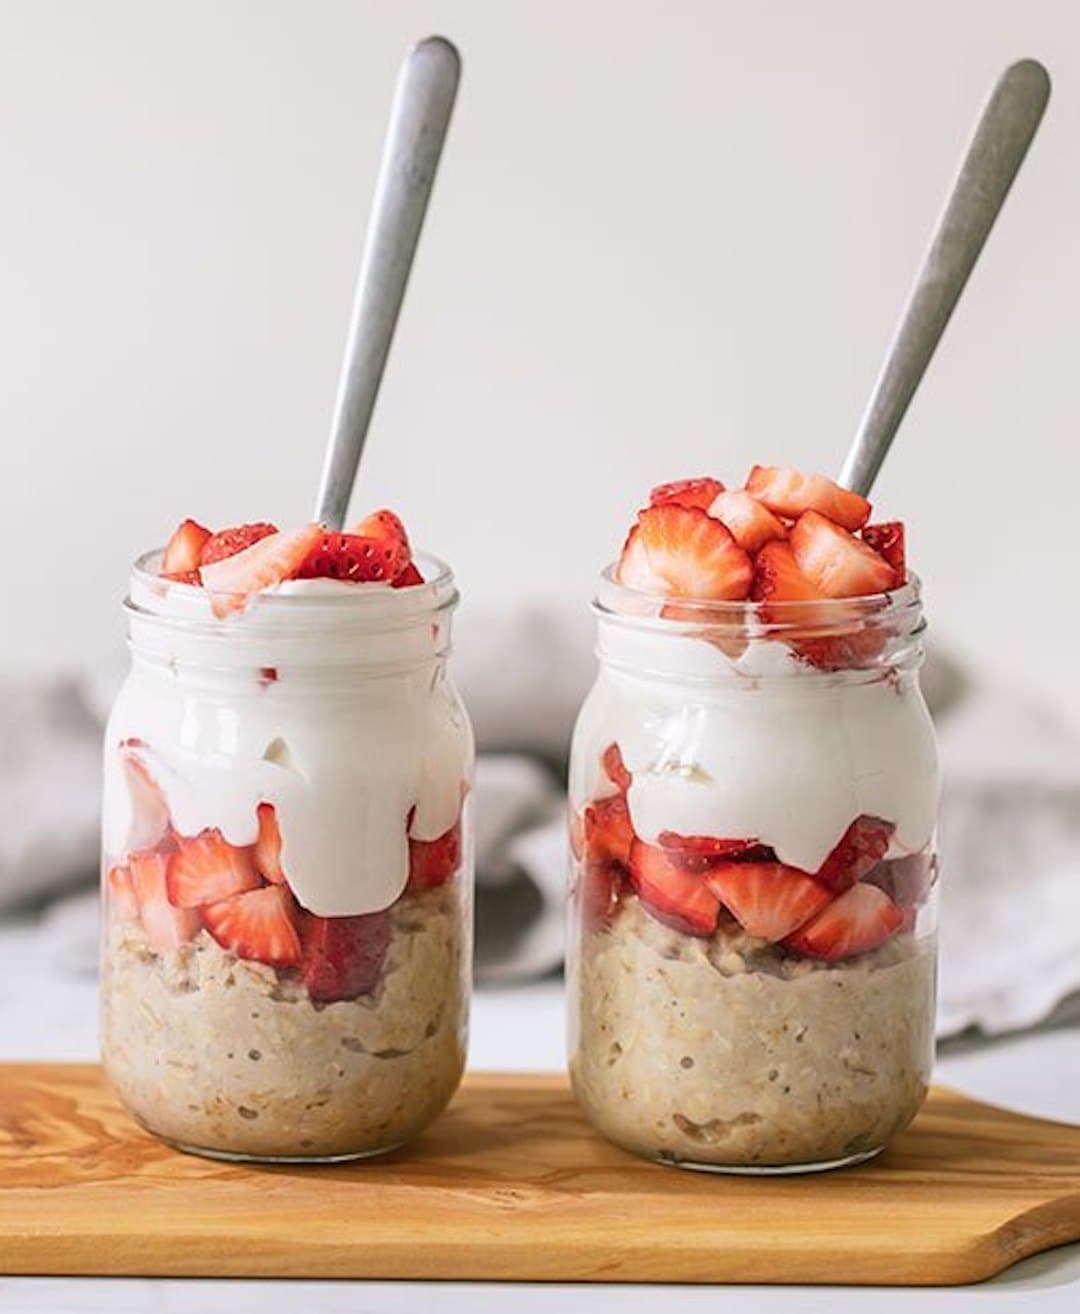 Strawberry overnight oats layered with yogurt in a jar